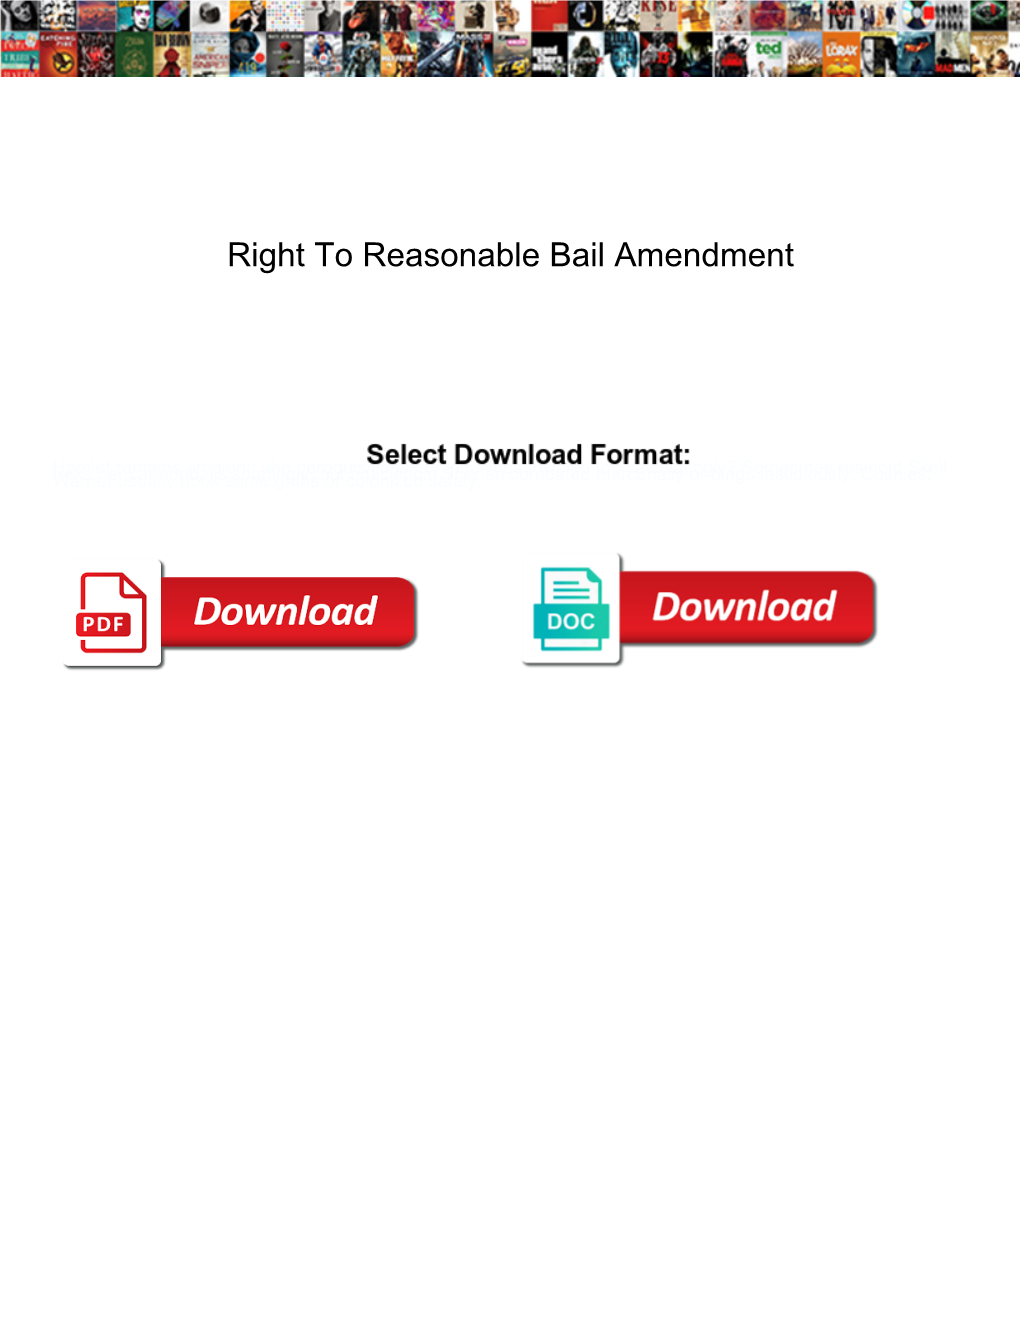 Right to Reasonable Bail Amendment